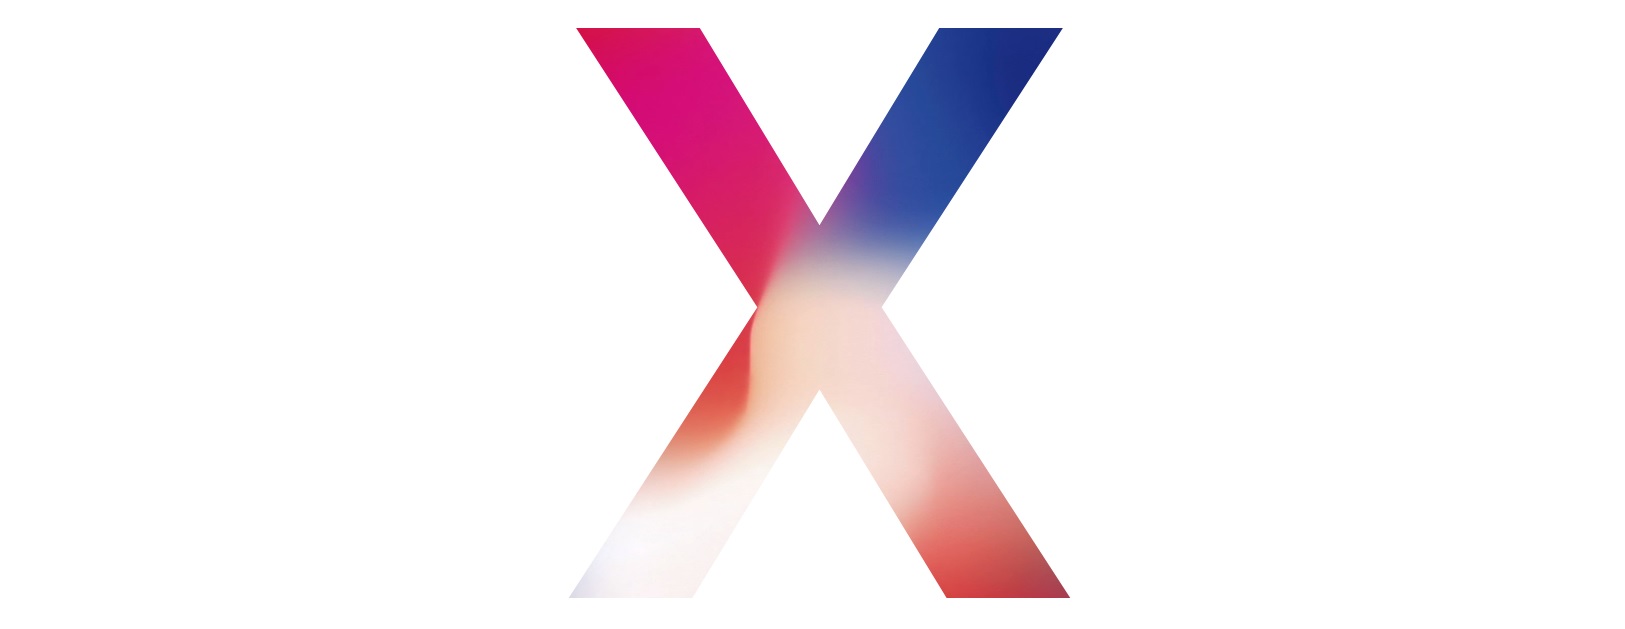 iPhone X - Logo X